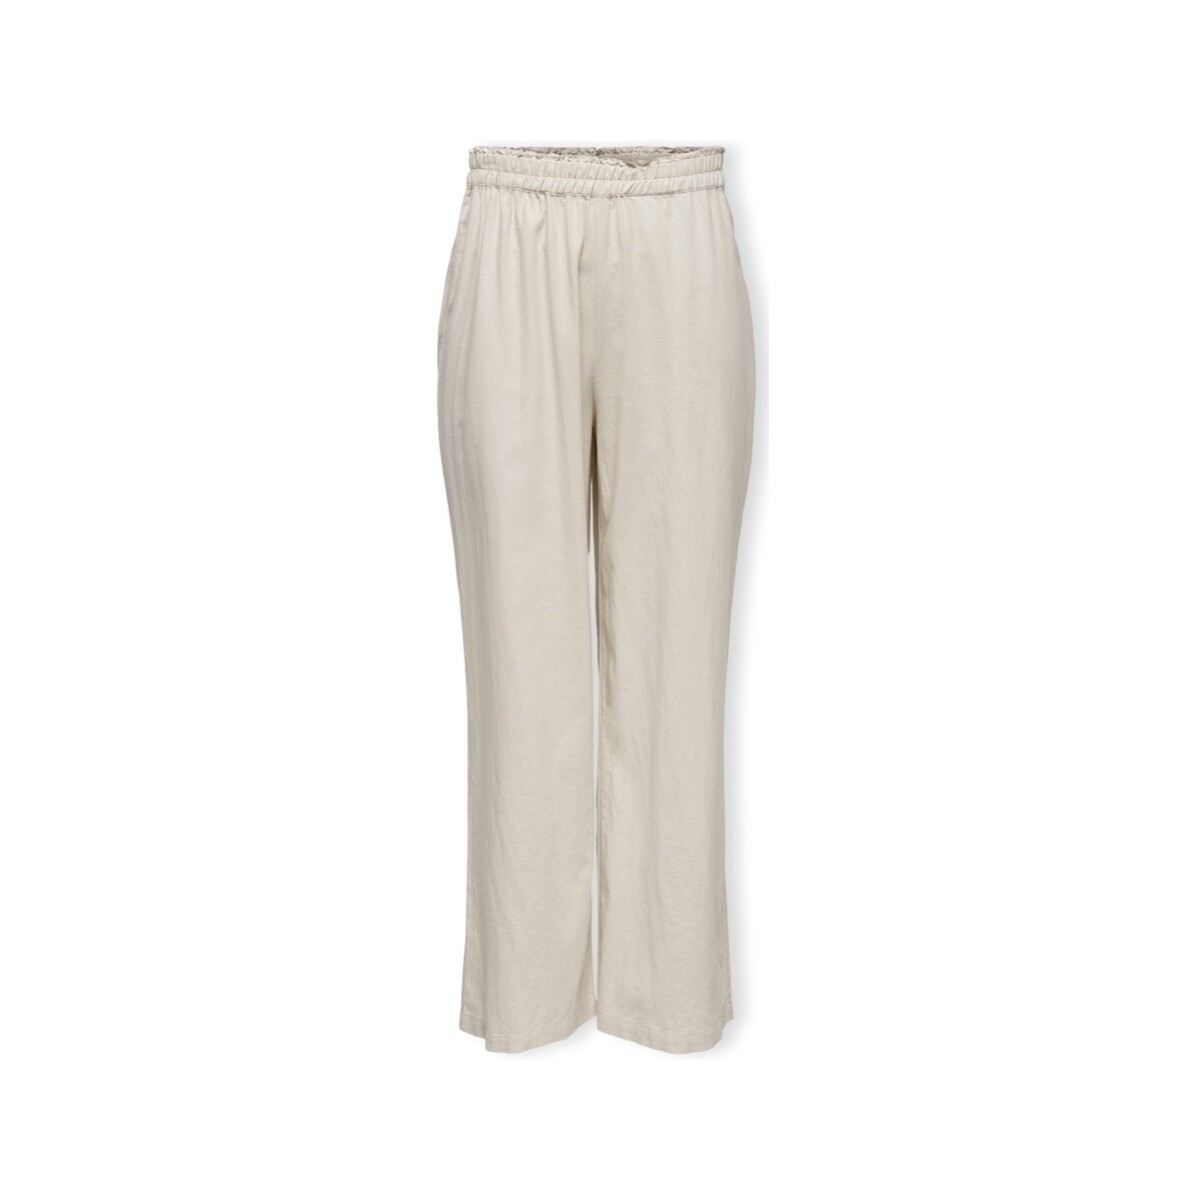 Vêtements Femme Pantalons Only Noos Trousers Tokyo Linen - Moonbeam Beige